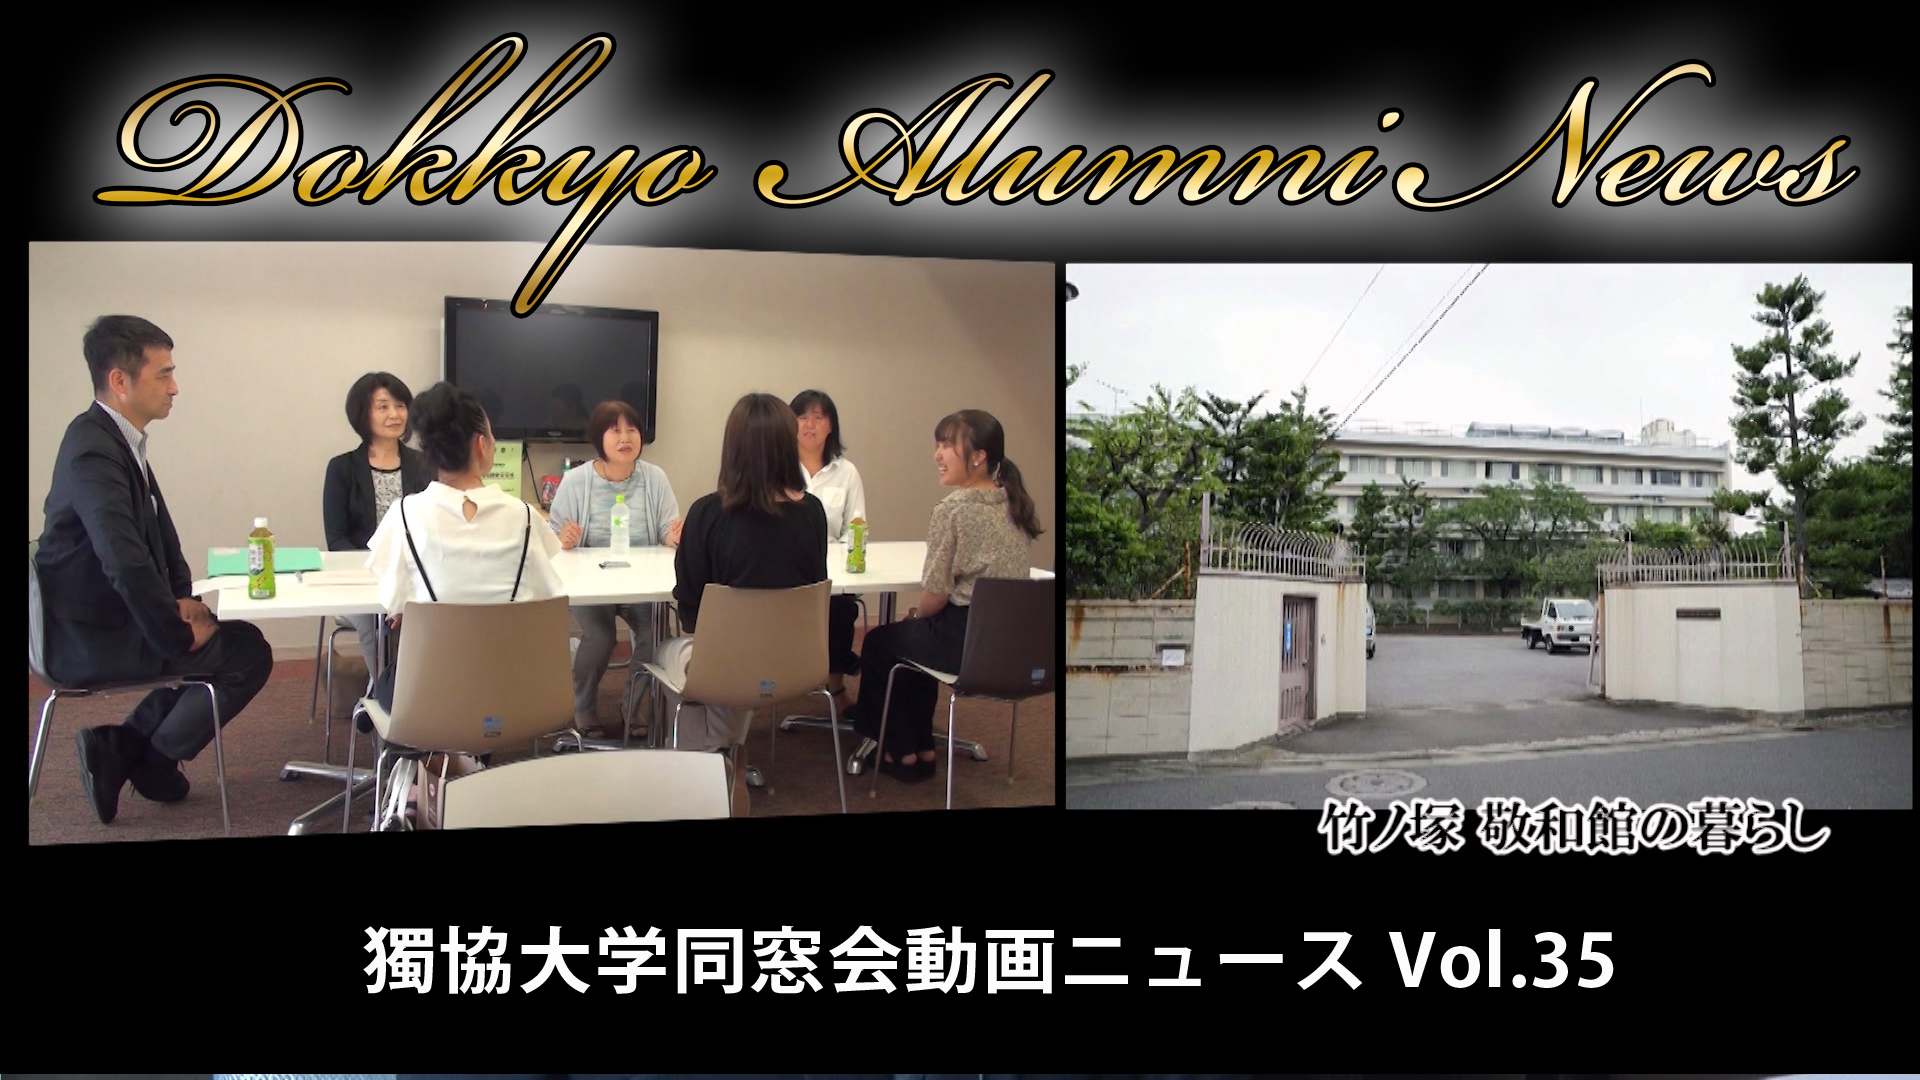 「Dokkyo Alumni News」VOL.35「敬和館今昔」を公開！